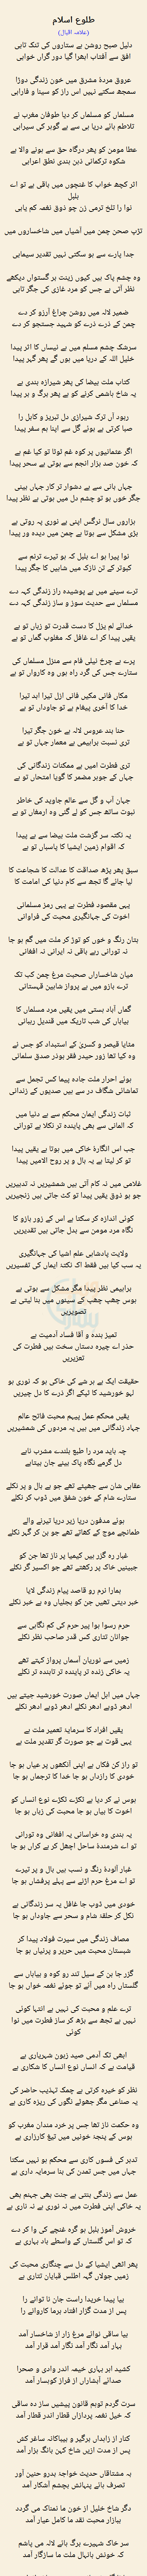 Tulu E Islam by Allama Iqbal - Urdu Poetry